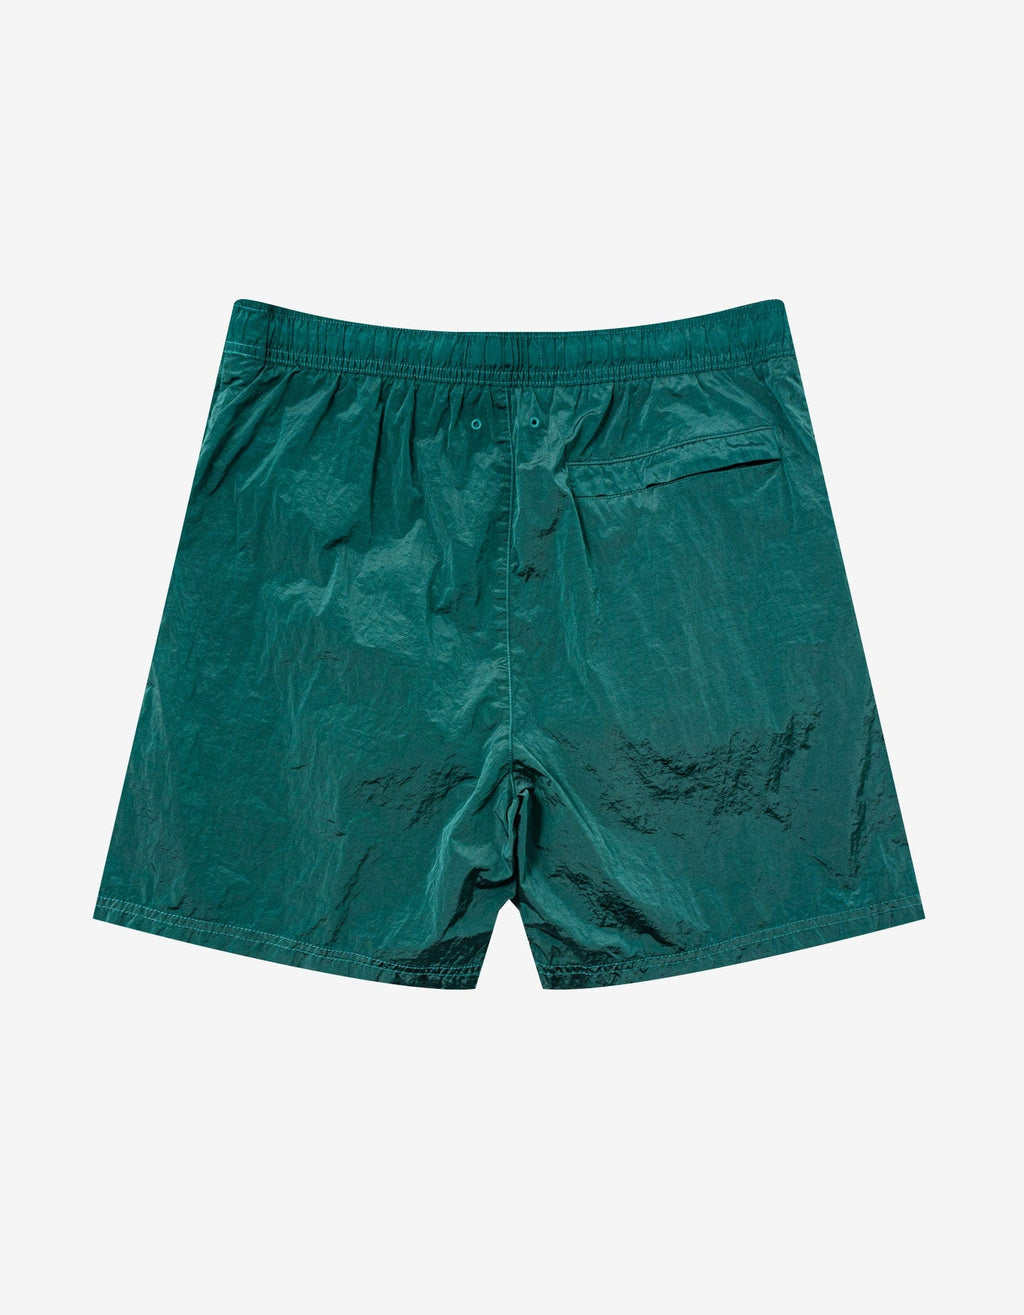 Stone Island Turquoise Nylon Metal Swim Shorts